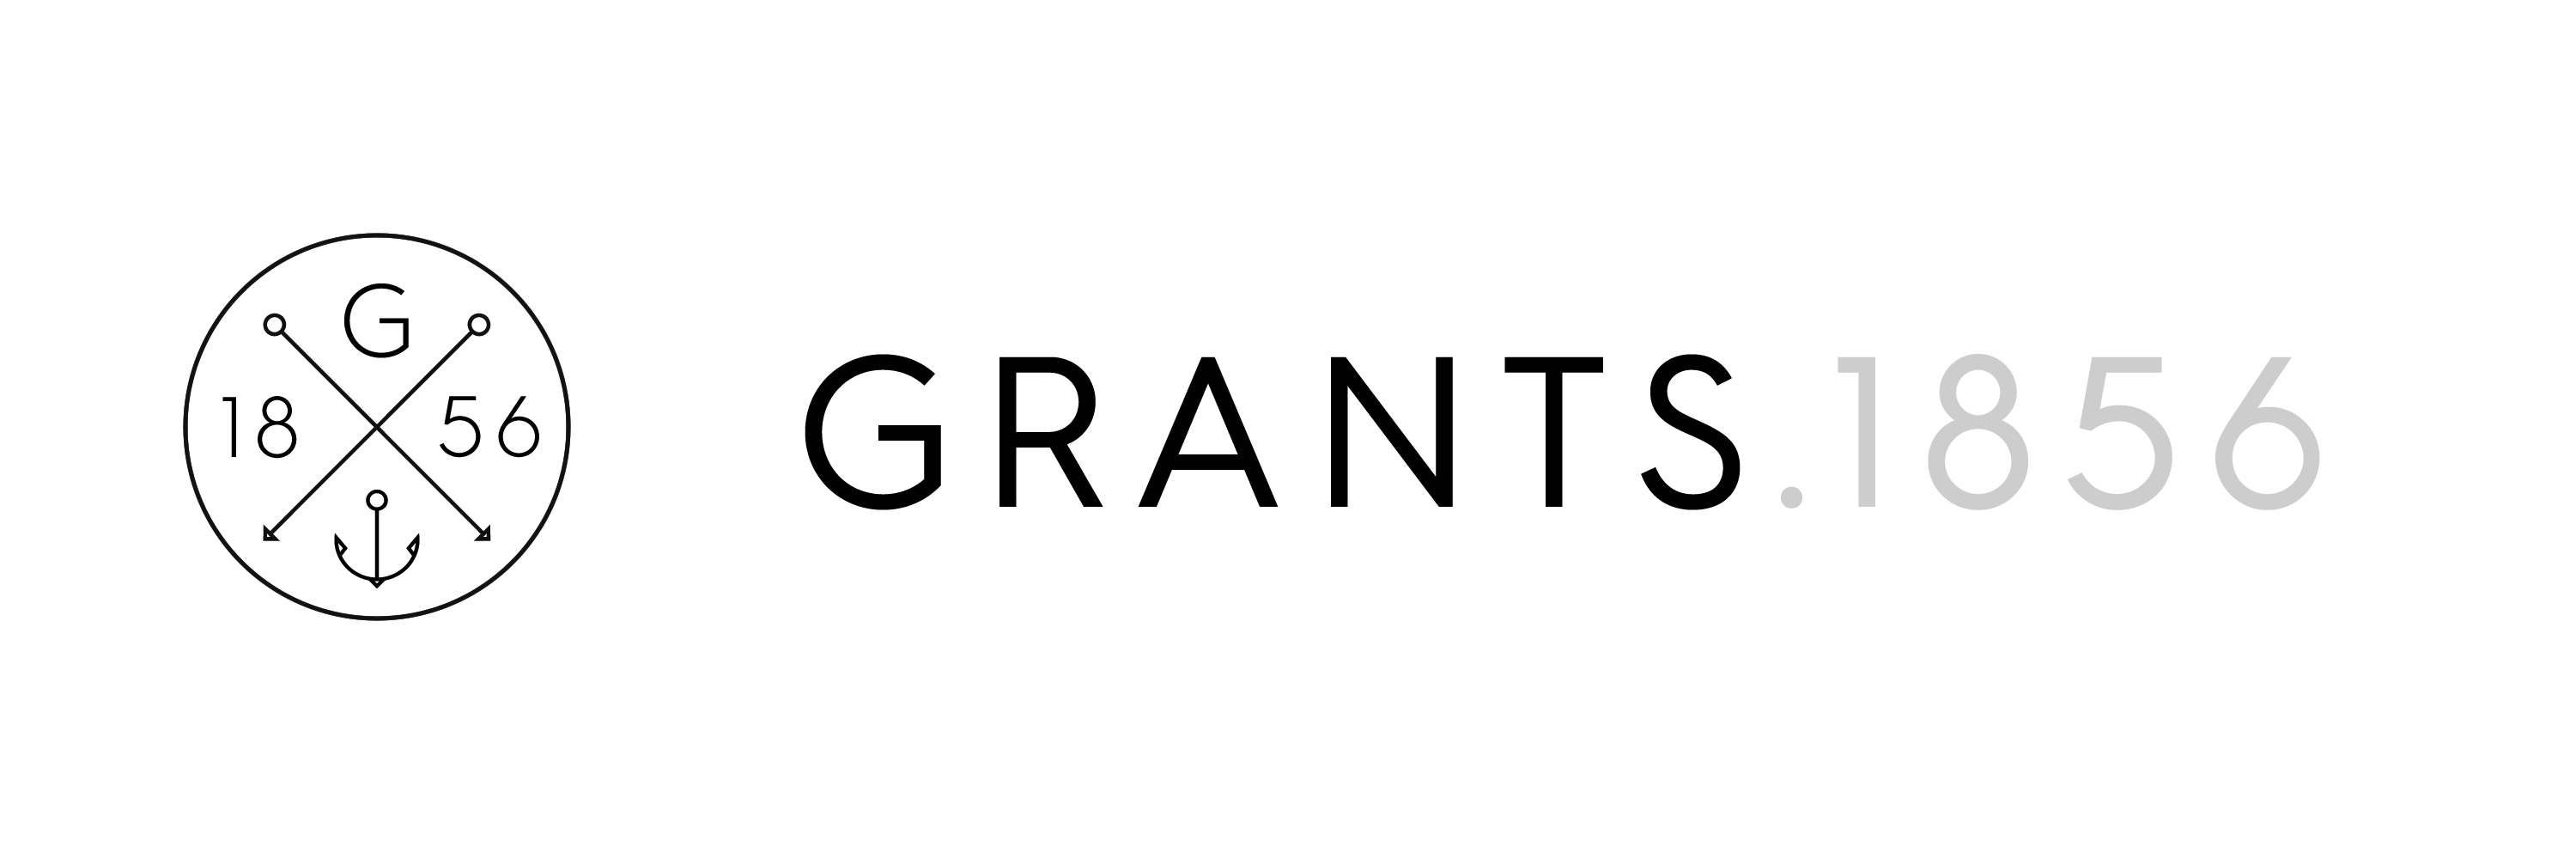 grants1856.final-logo-2